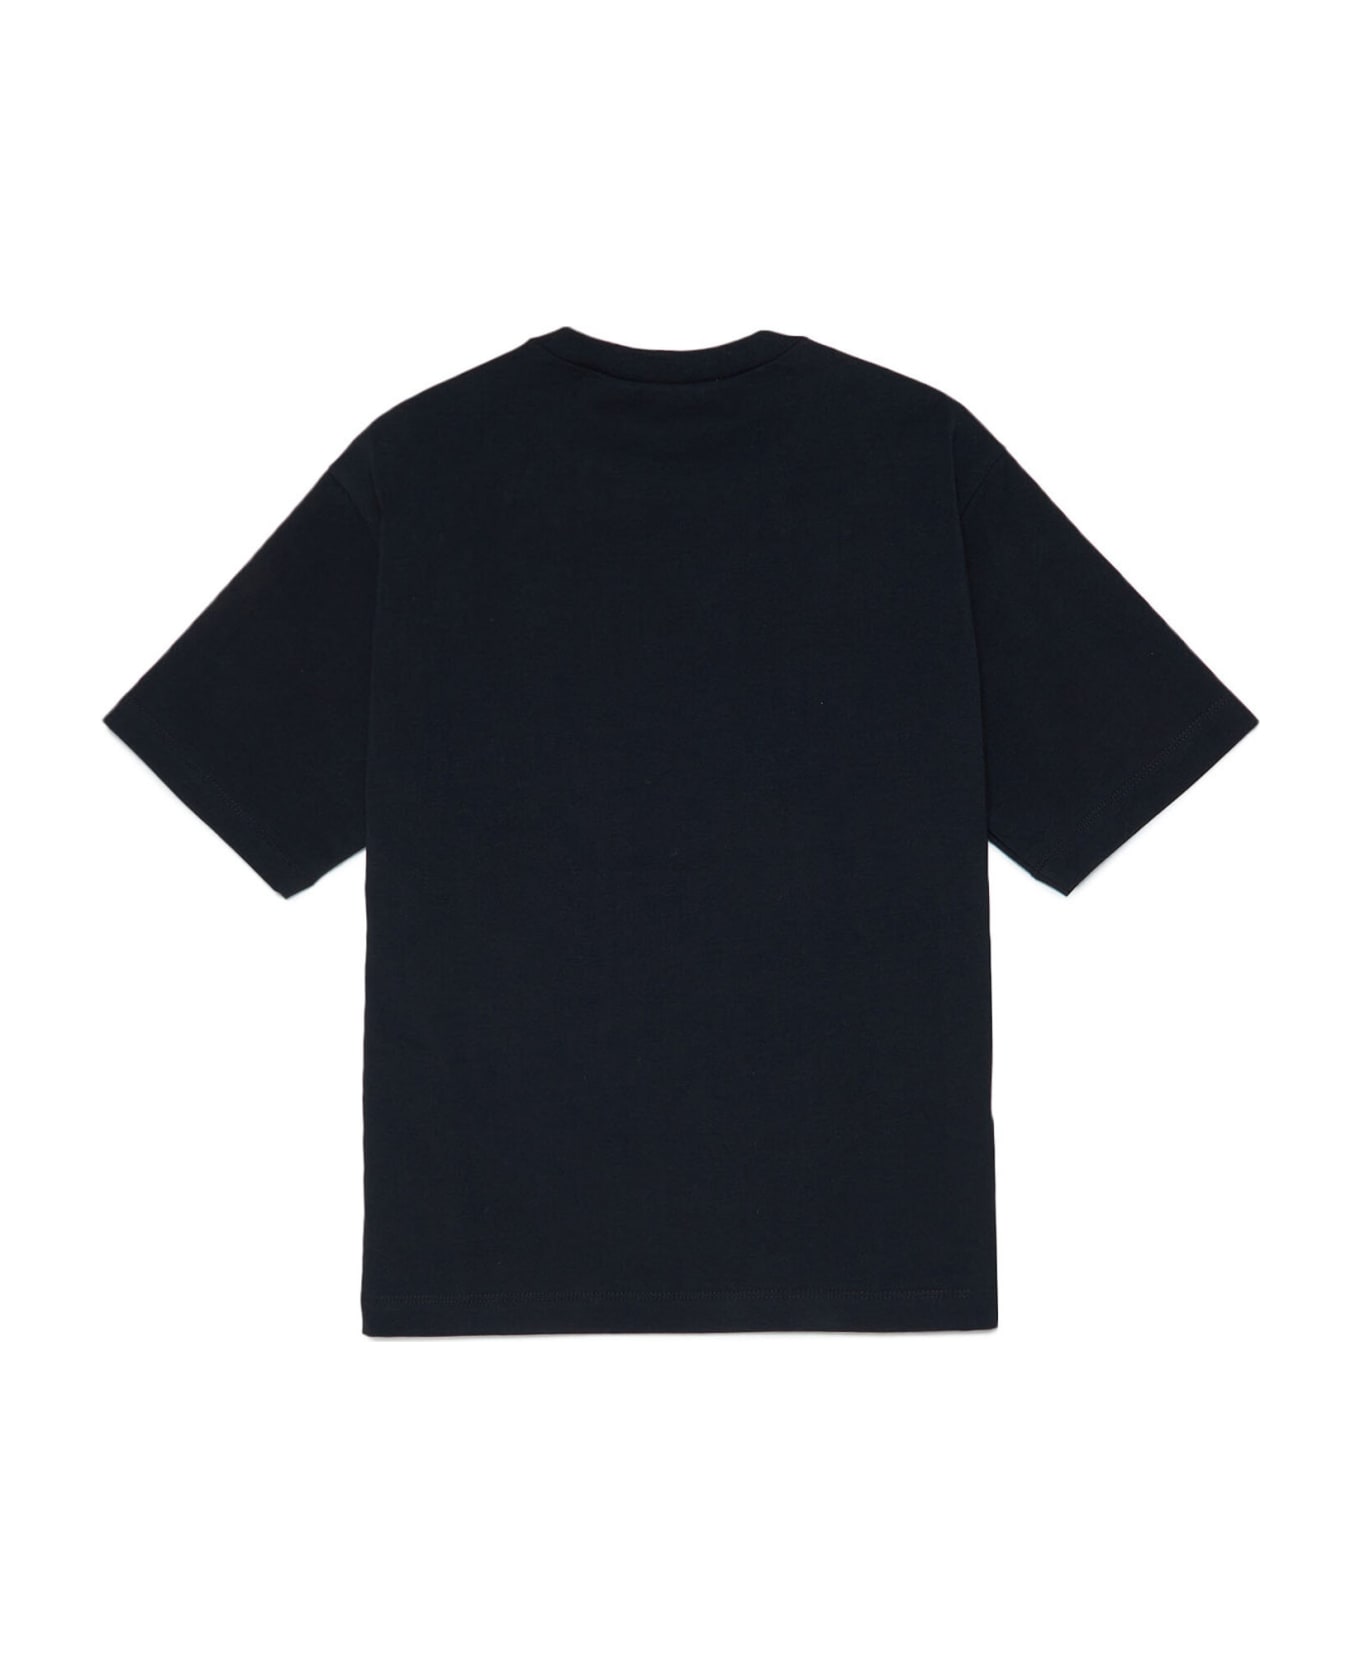 Marni Mt207f Over T-shirt Marni Black Jersey T-shirt With Displaced Marni Logo - Black